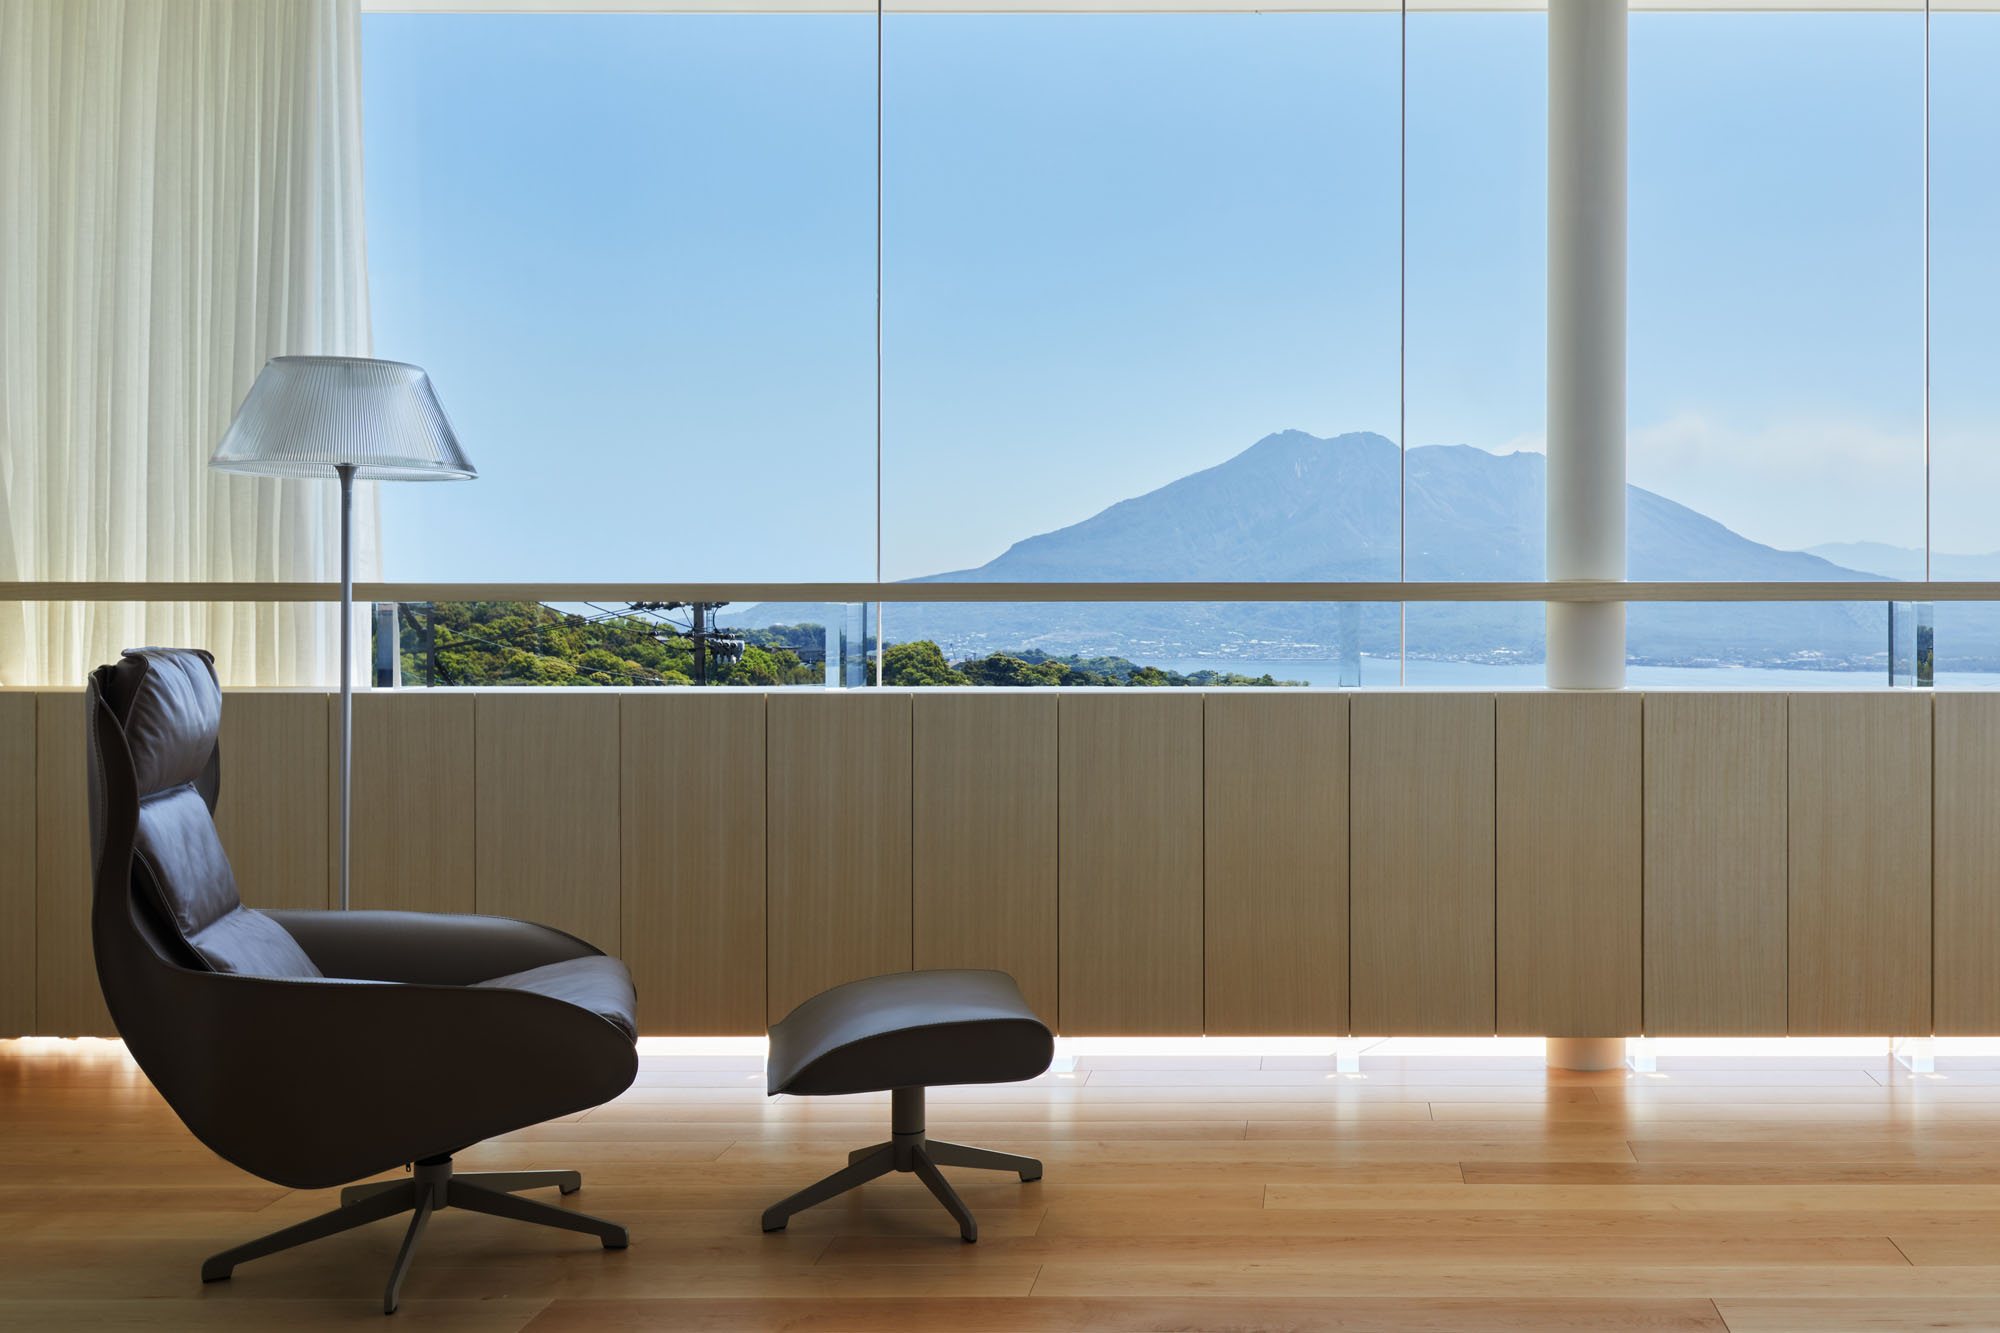 The view house of Sakurajima